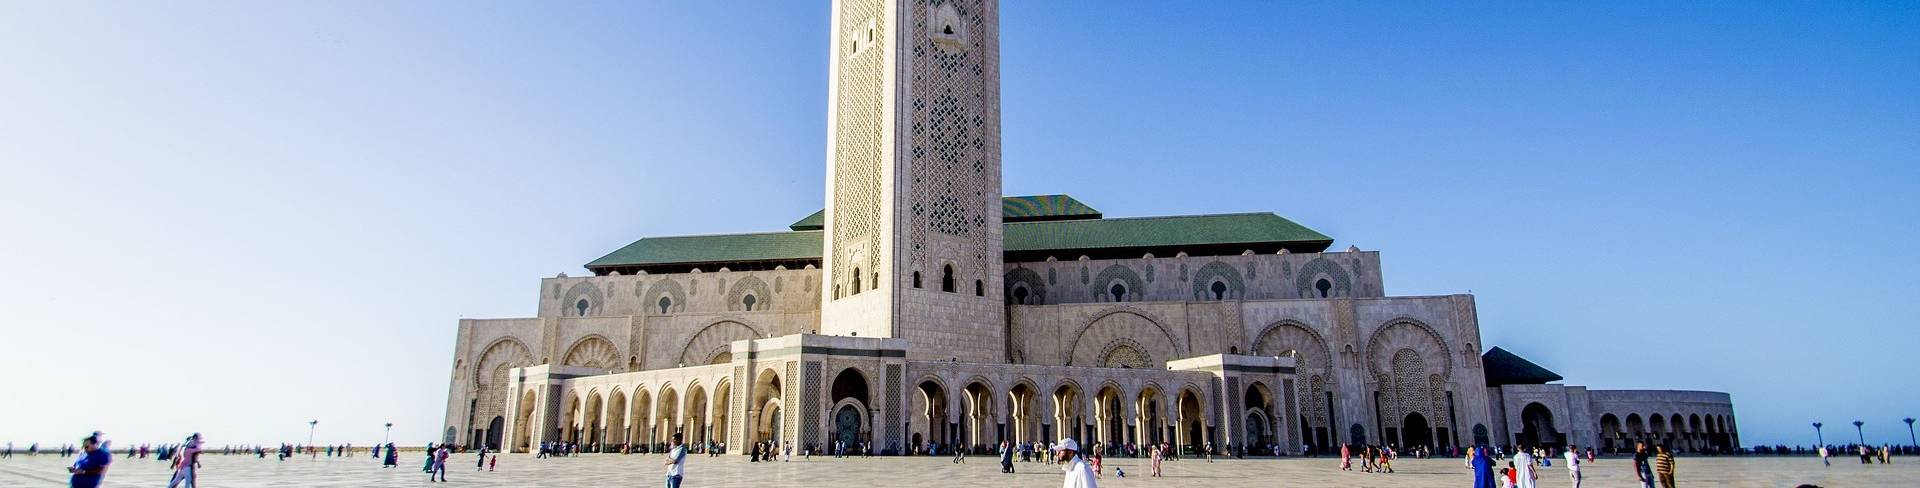 Касабланка - город в Марокко